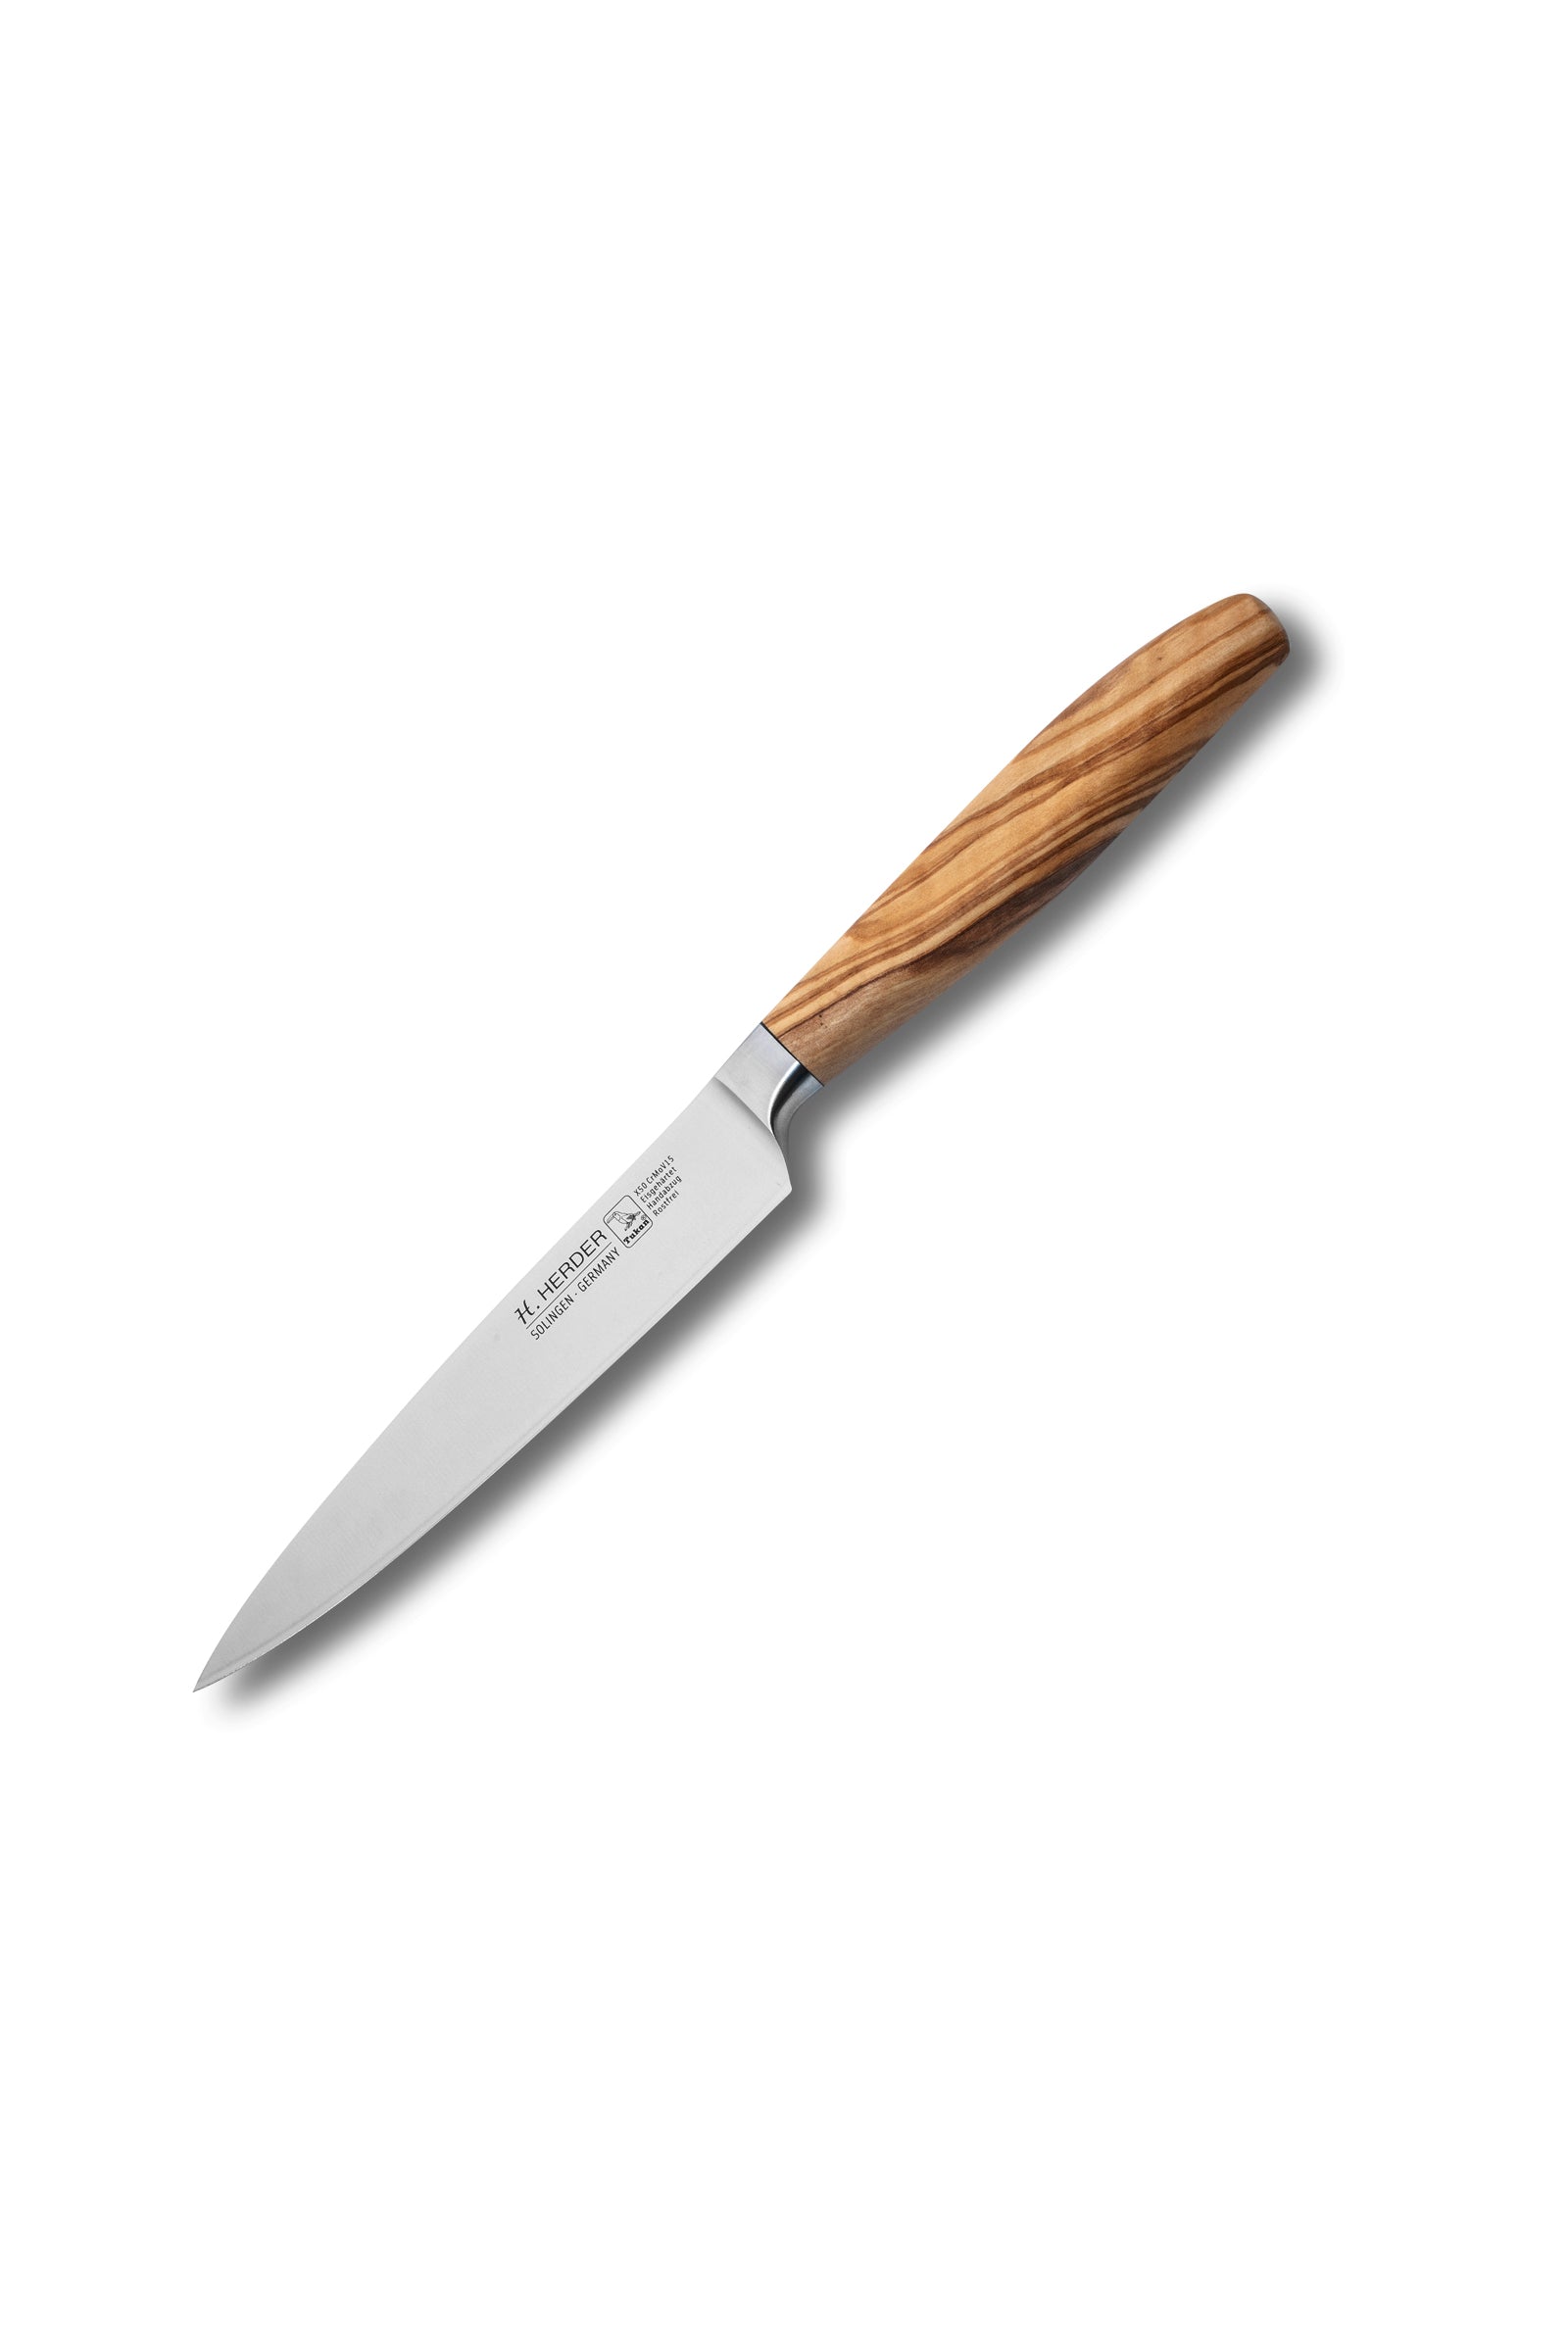 Ham knife Eterno, olive wood, blade length 16cm, forged